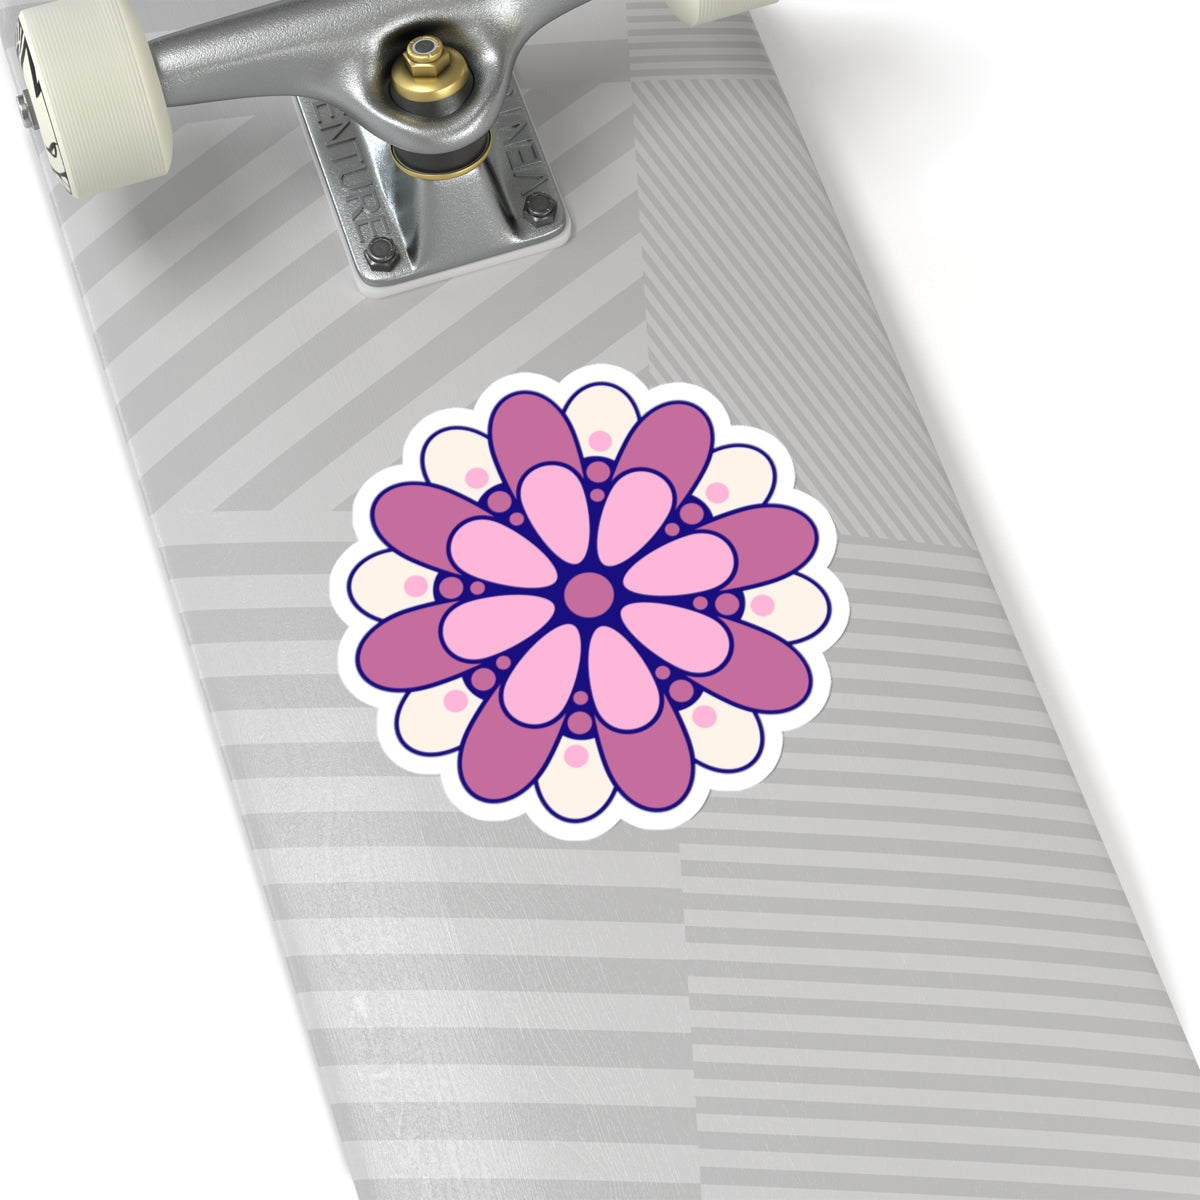 Cute Pink Retro Flower Sticker - Kiss-Cut Sticker (1)